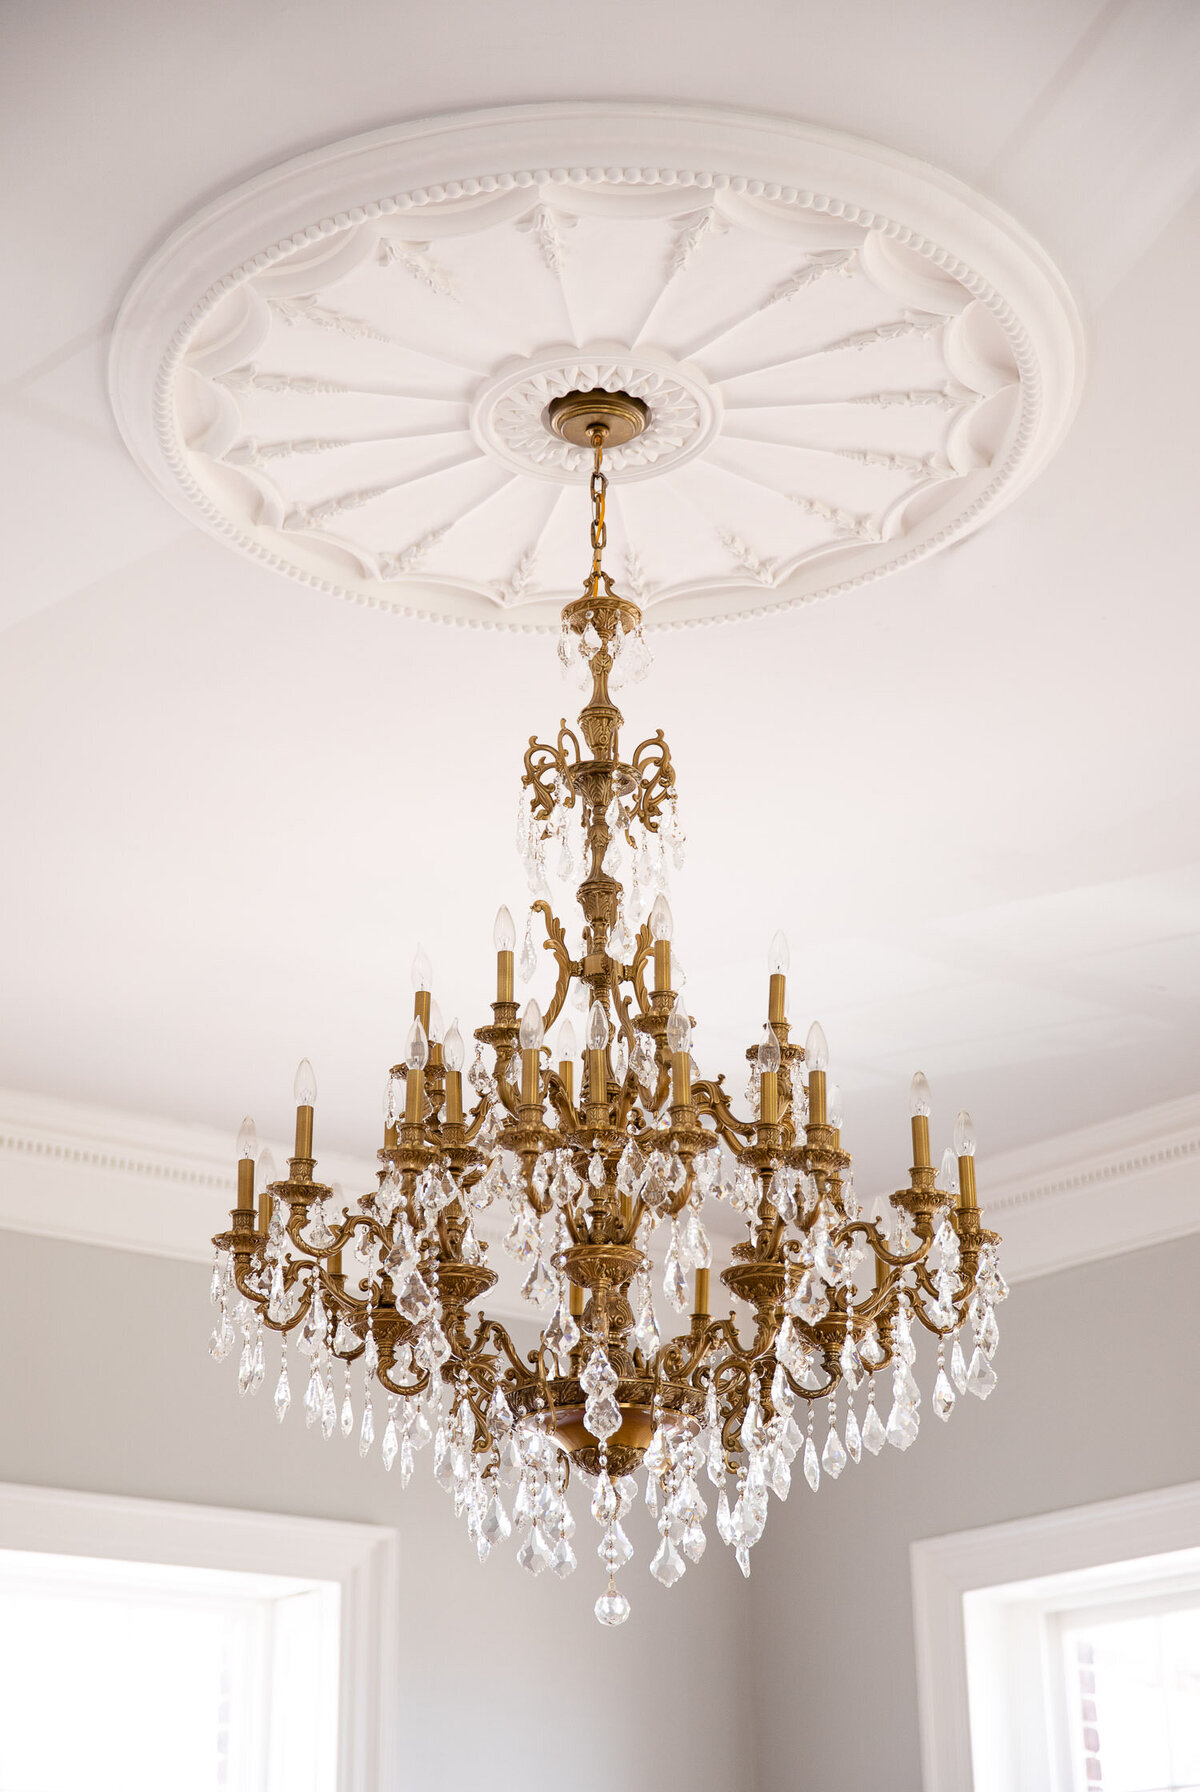 The Gadsden House chandelier